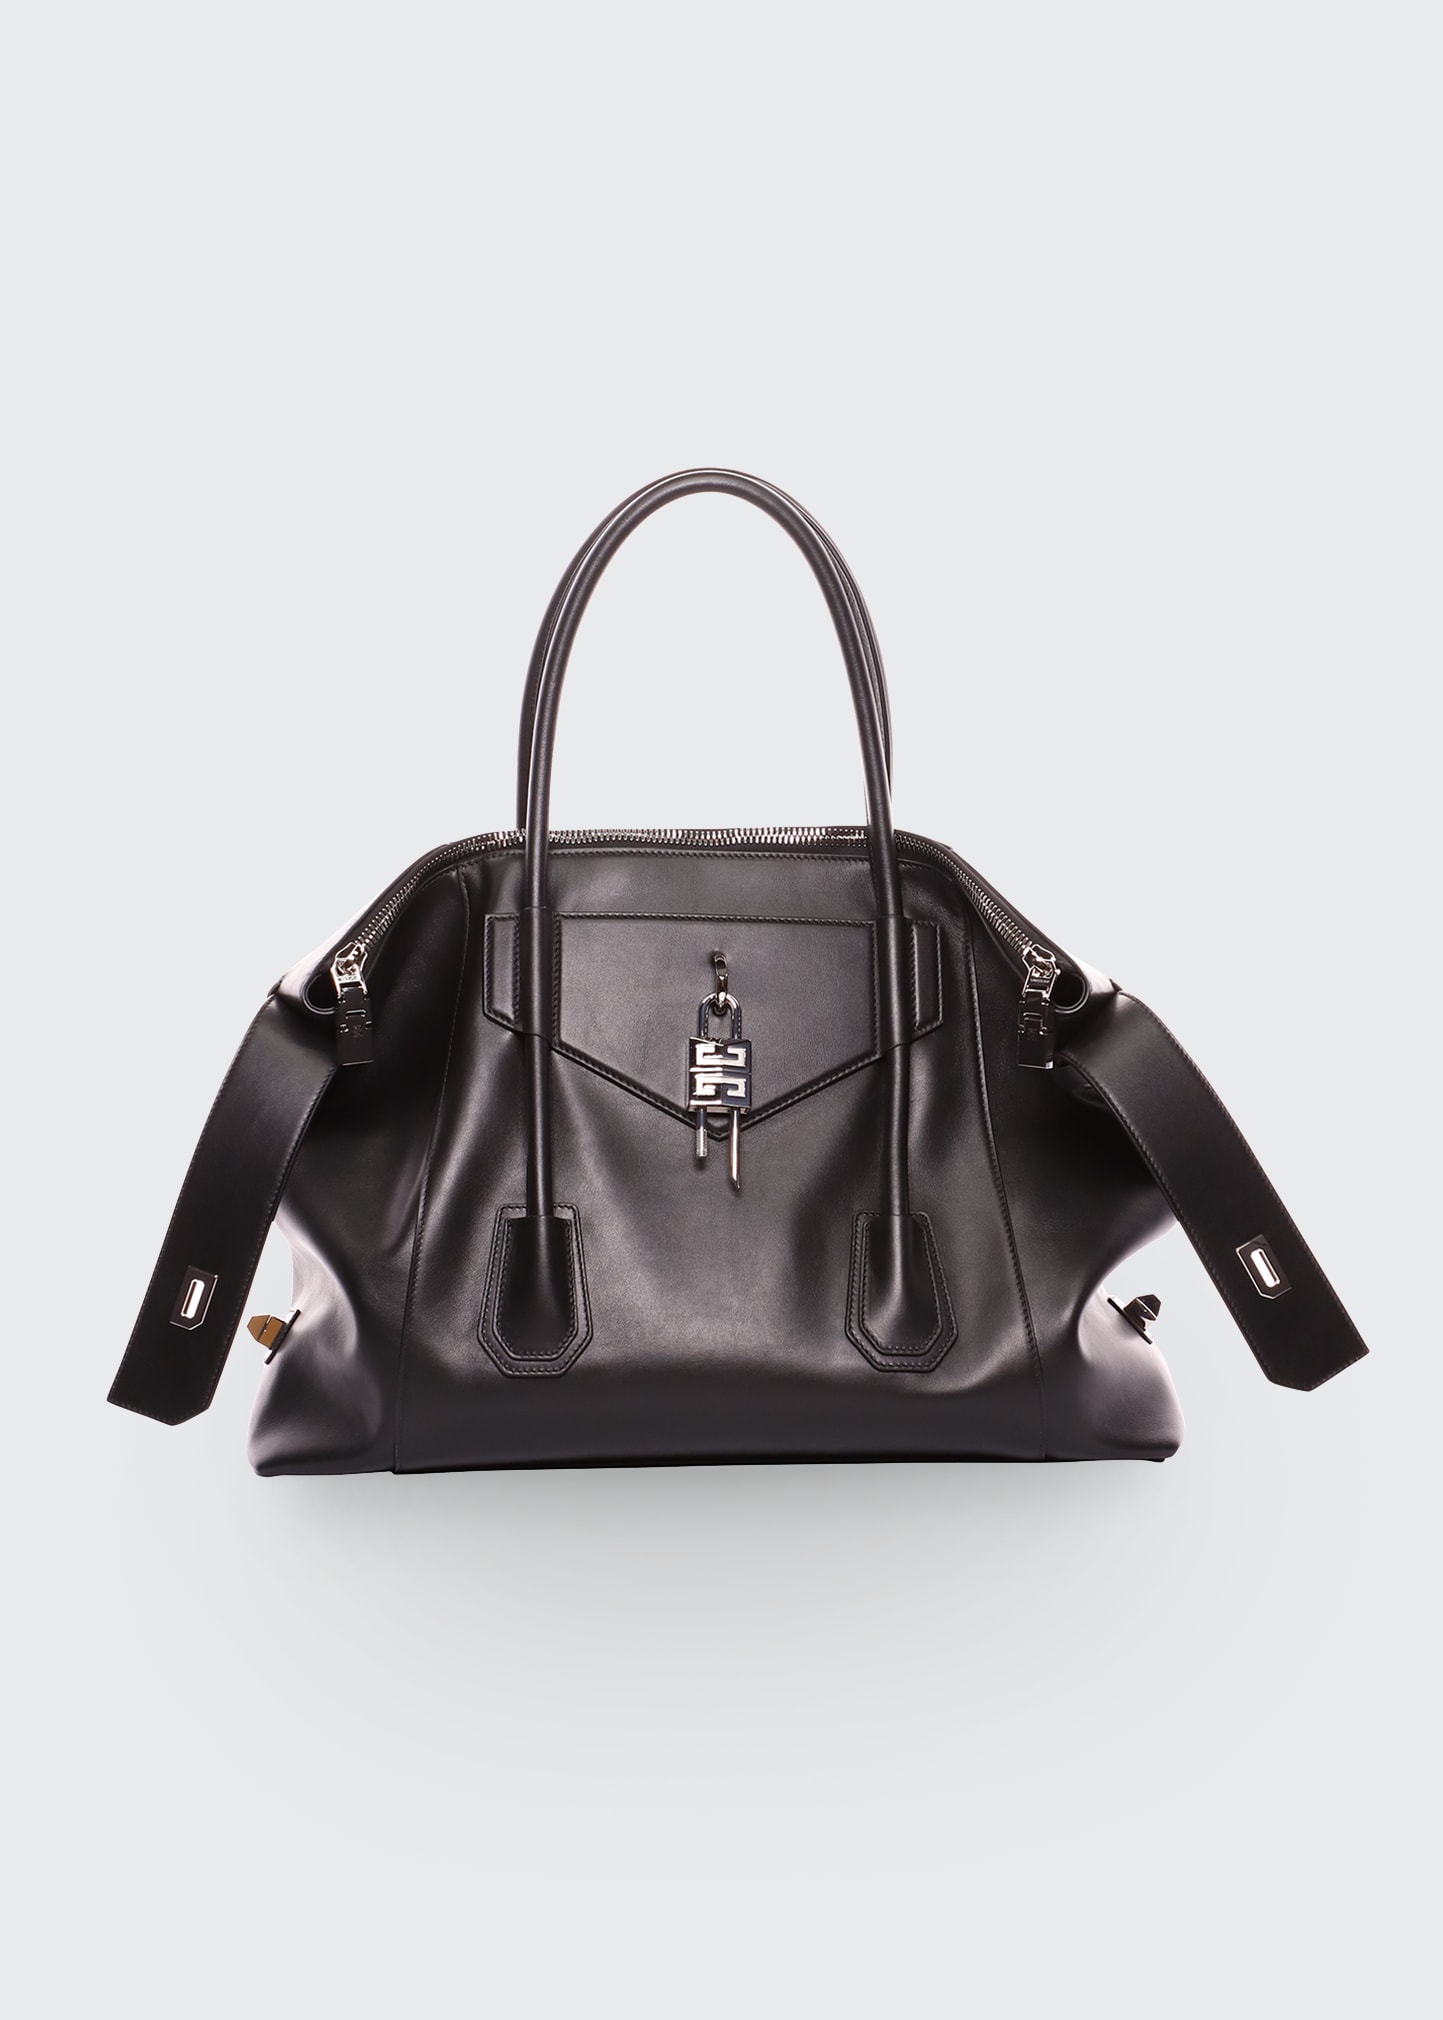 Givenchy Medium Antigona Soft Lock Bag in Calfskin